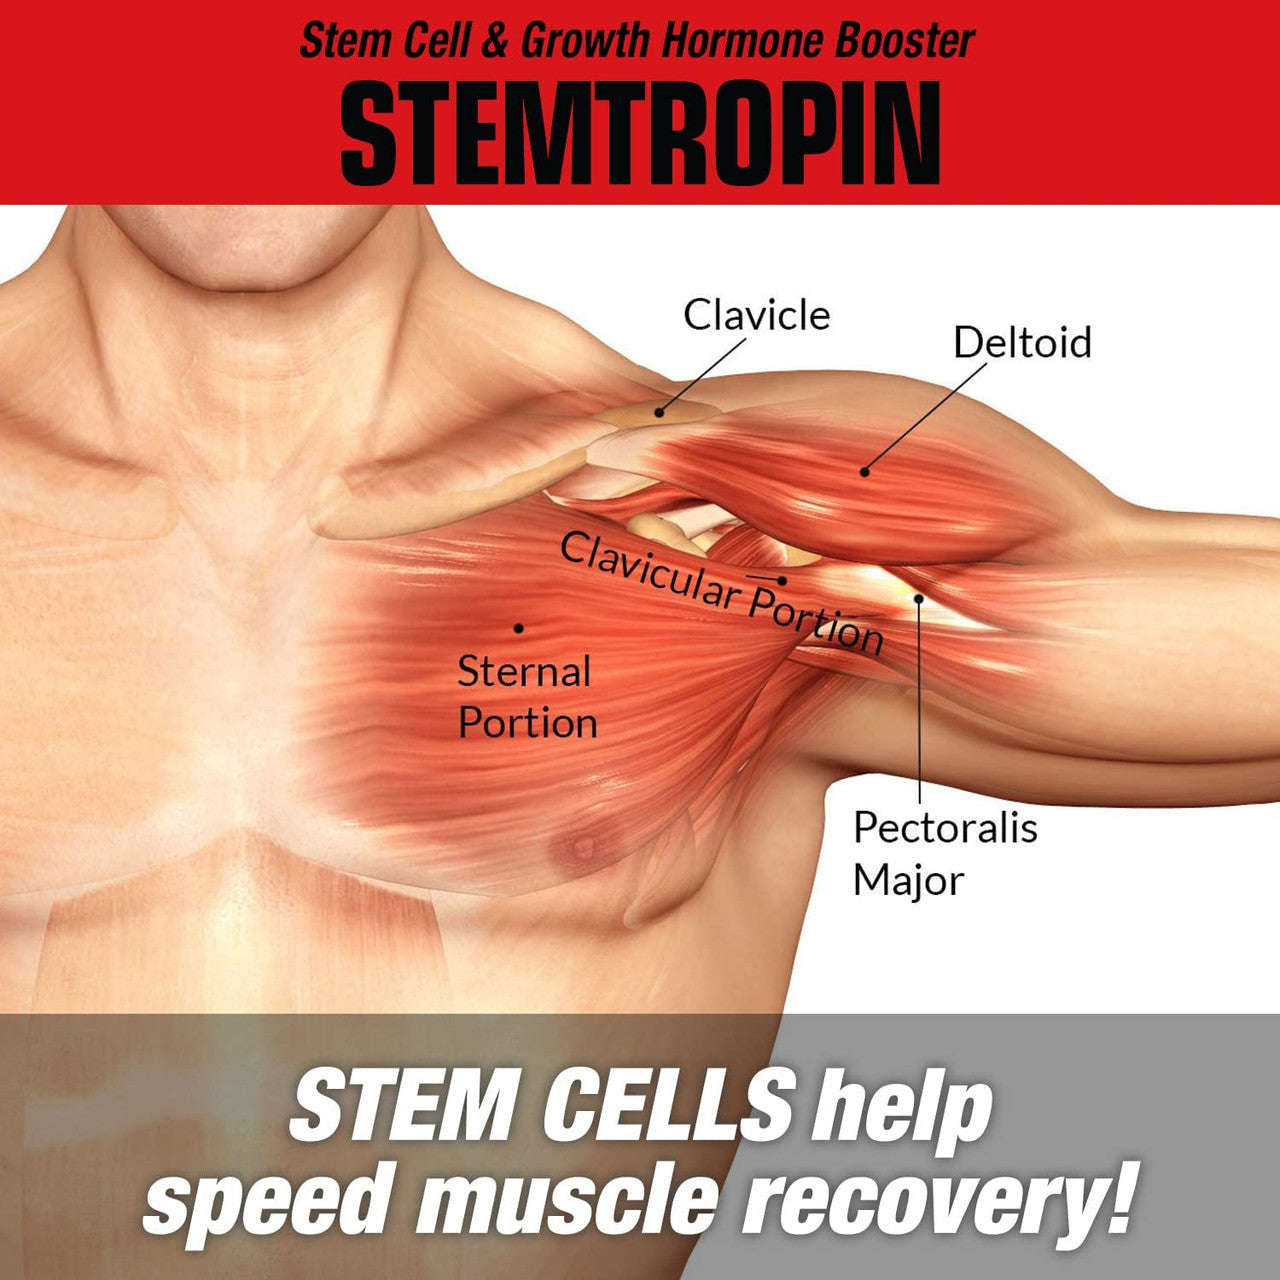 MuscleMeds Stemotopin Stem Cell effects